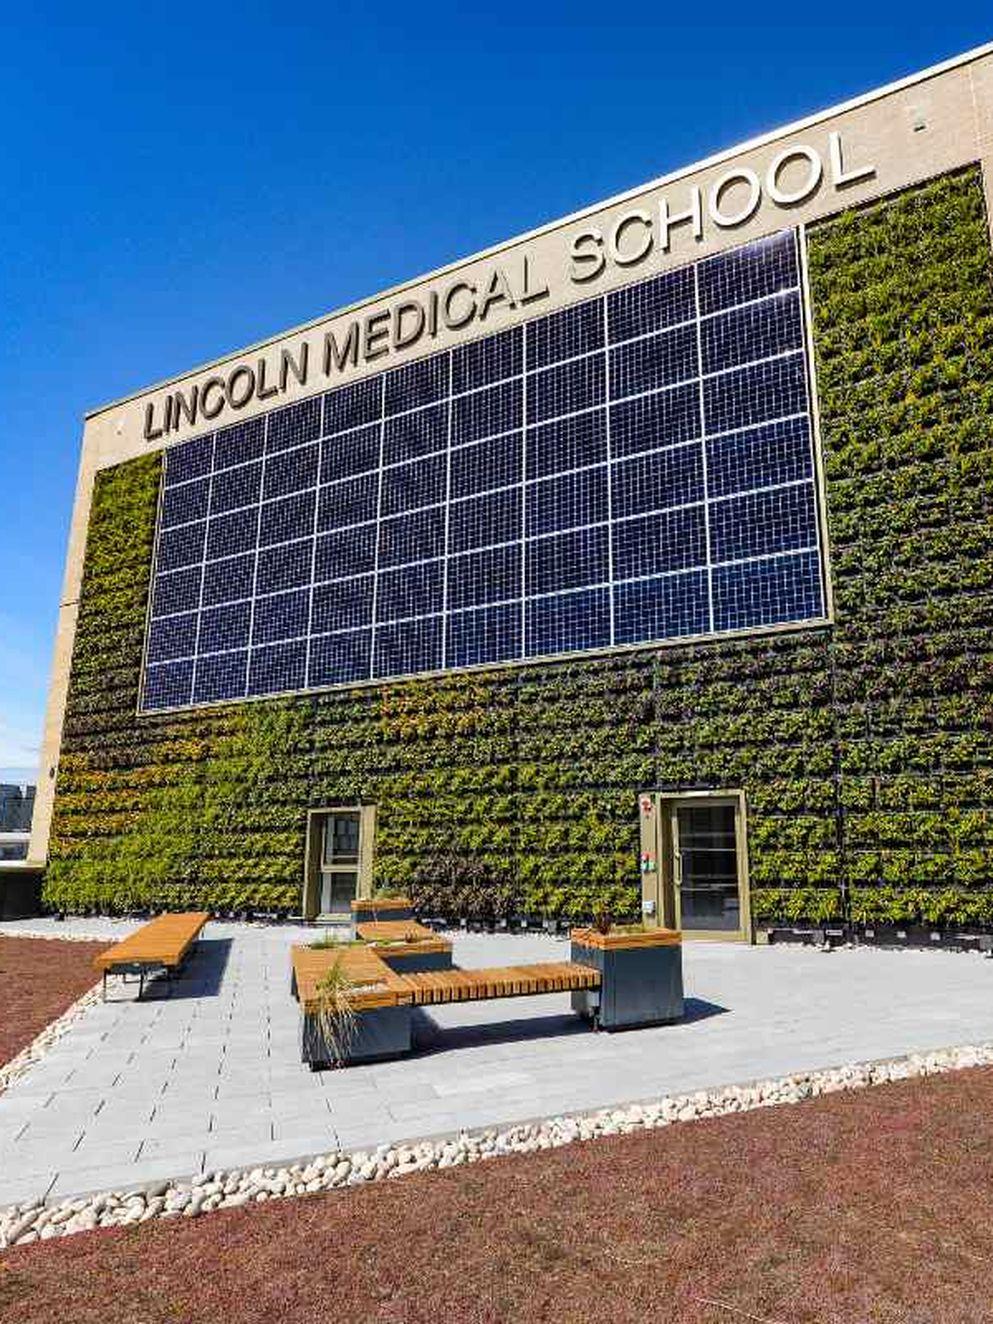 Lincoln medical school